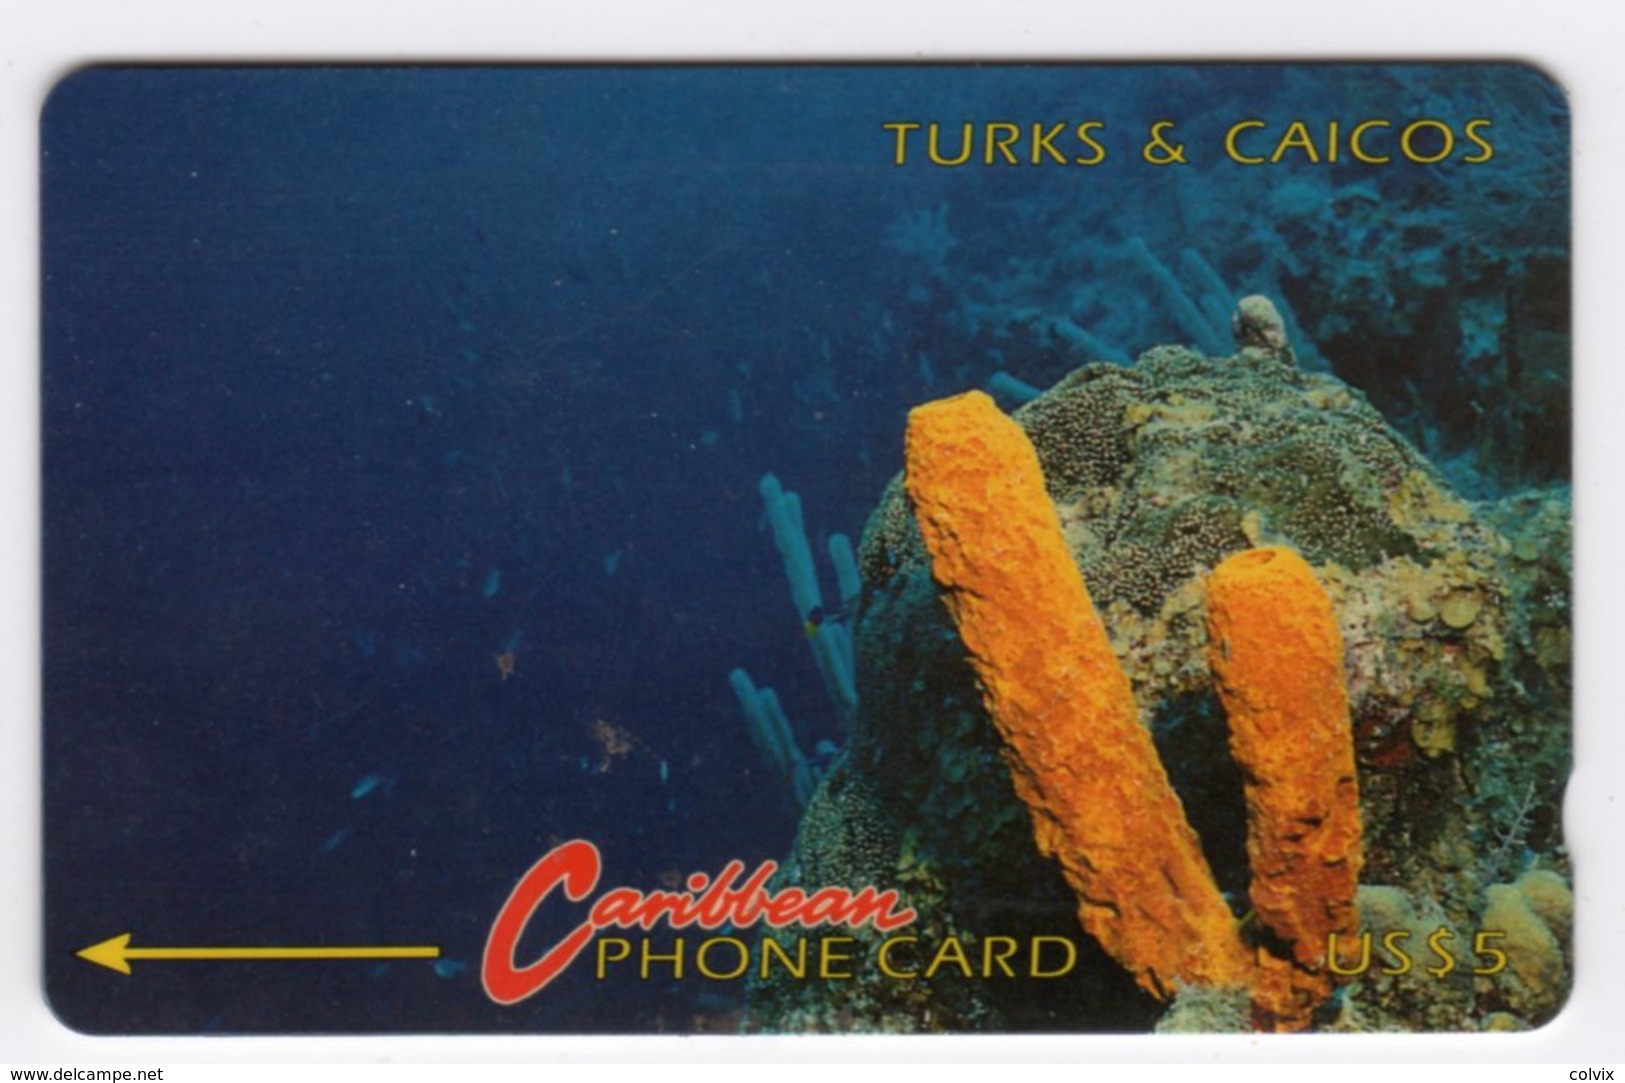 TURKS & CAICOS REF MVCARDS T&C-1B CABLE & WIRELESS 1991 5$ 1CTCB CORAIL - Turks & Caicos (Islands)